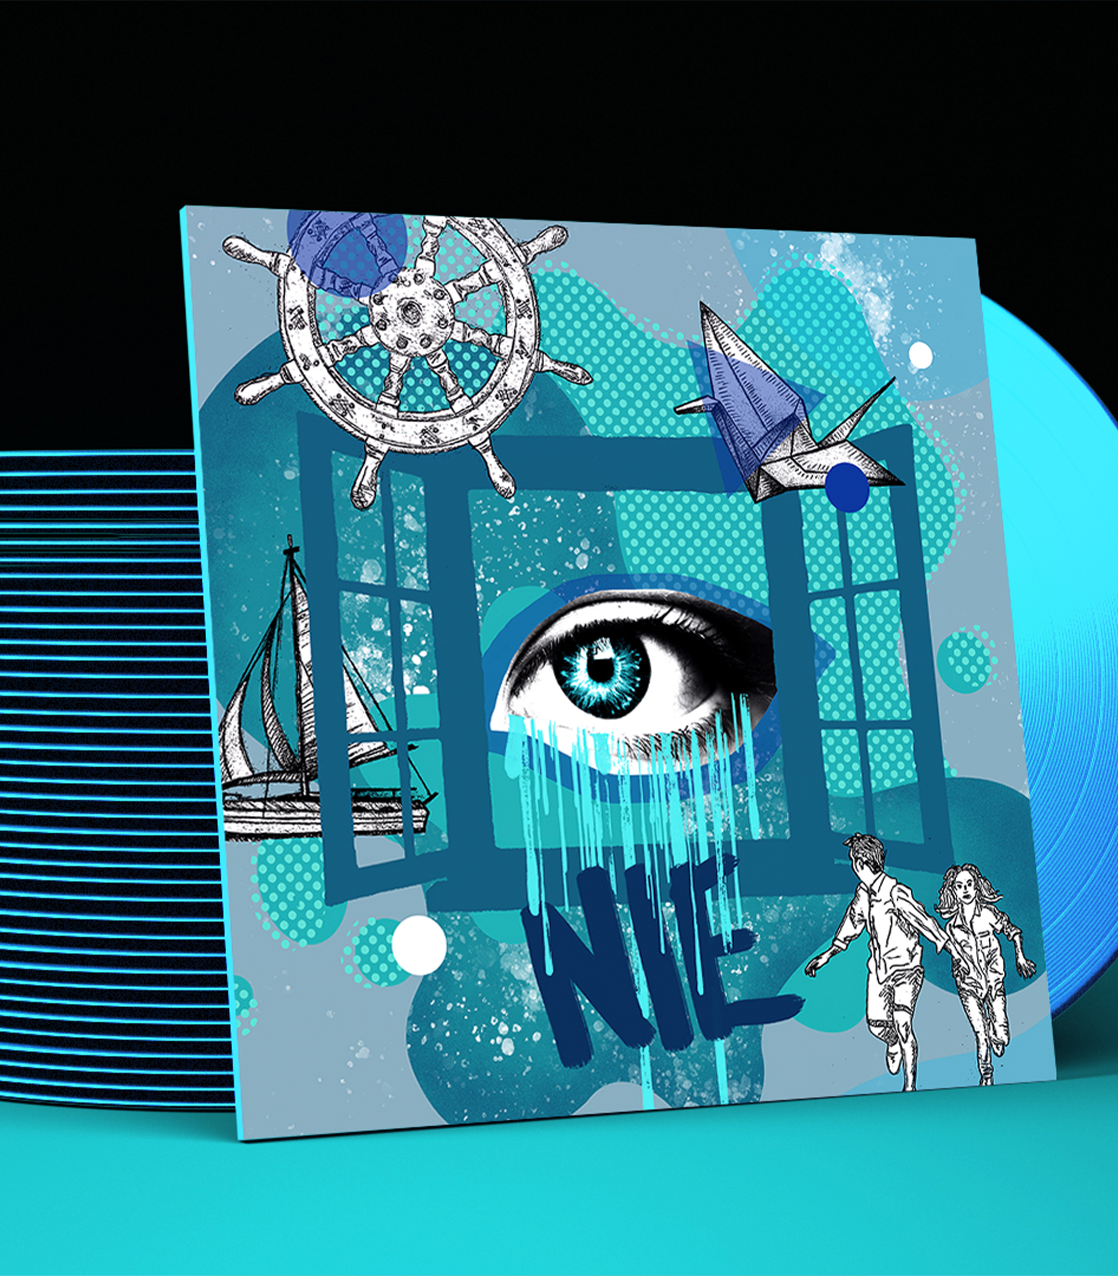 fynn-kliemann-album-cover-nie-redesign